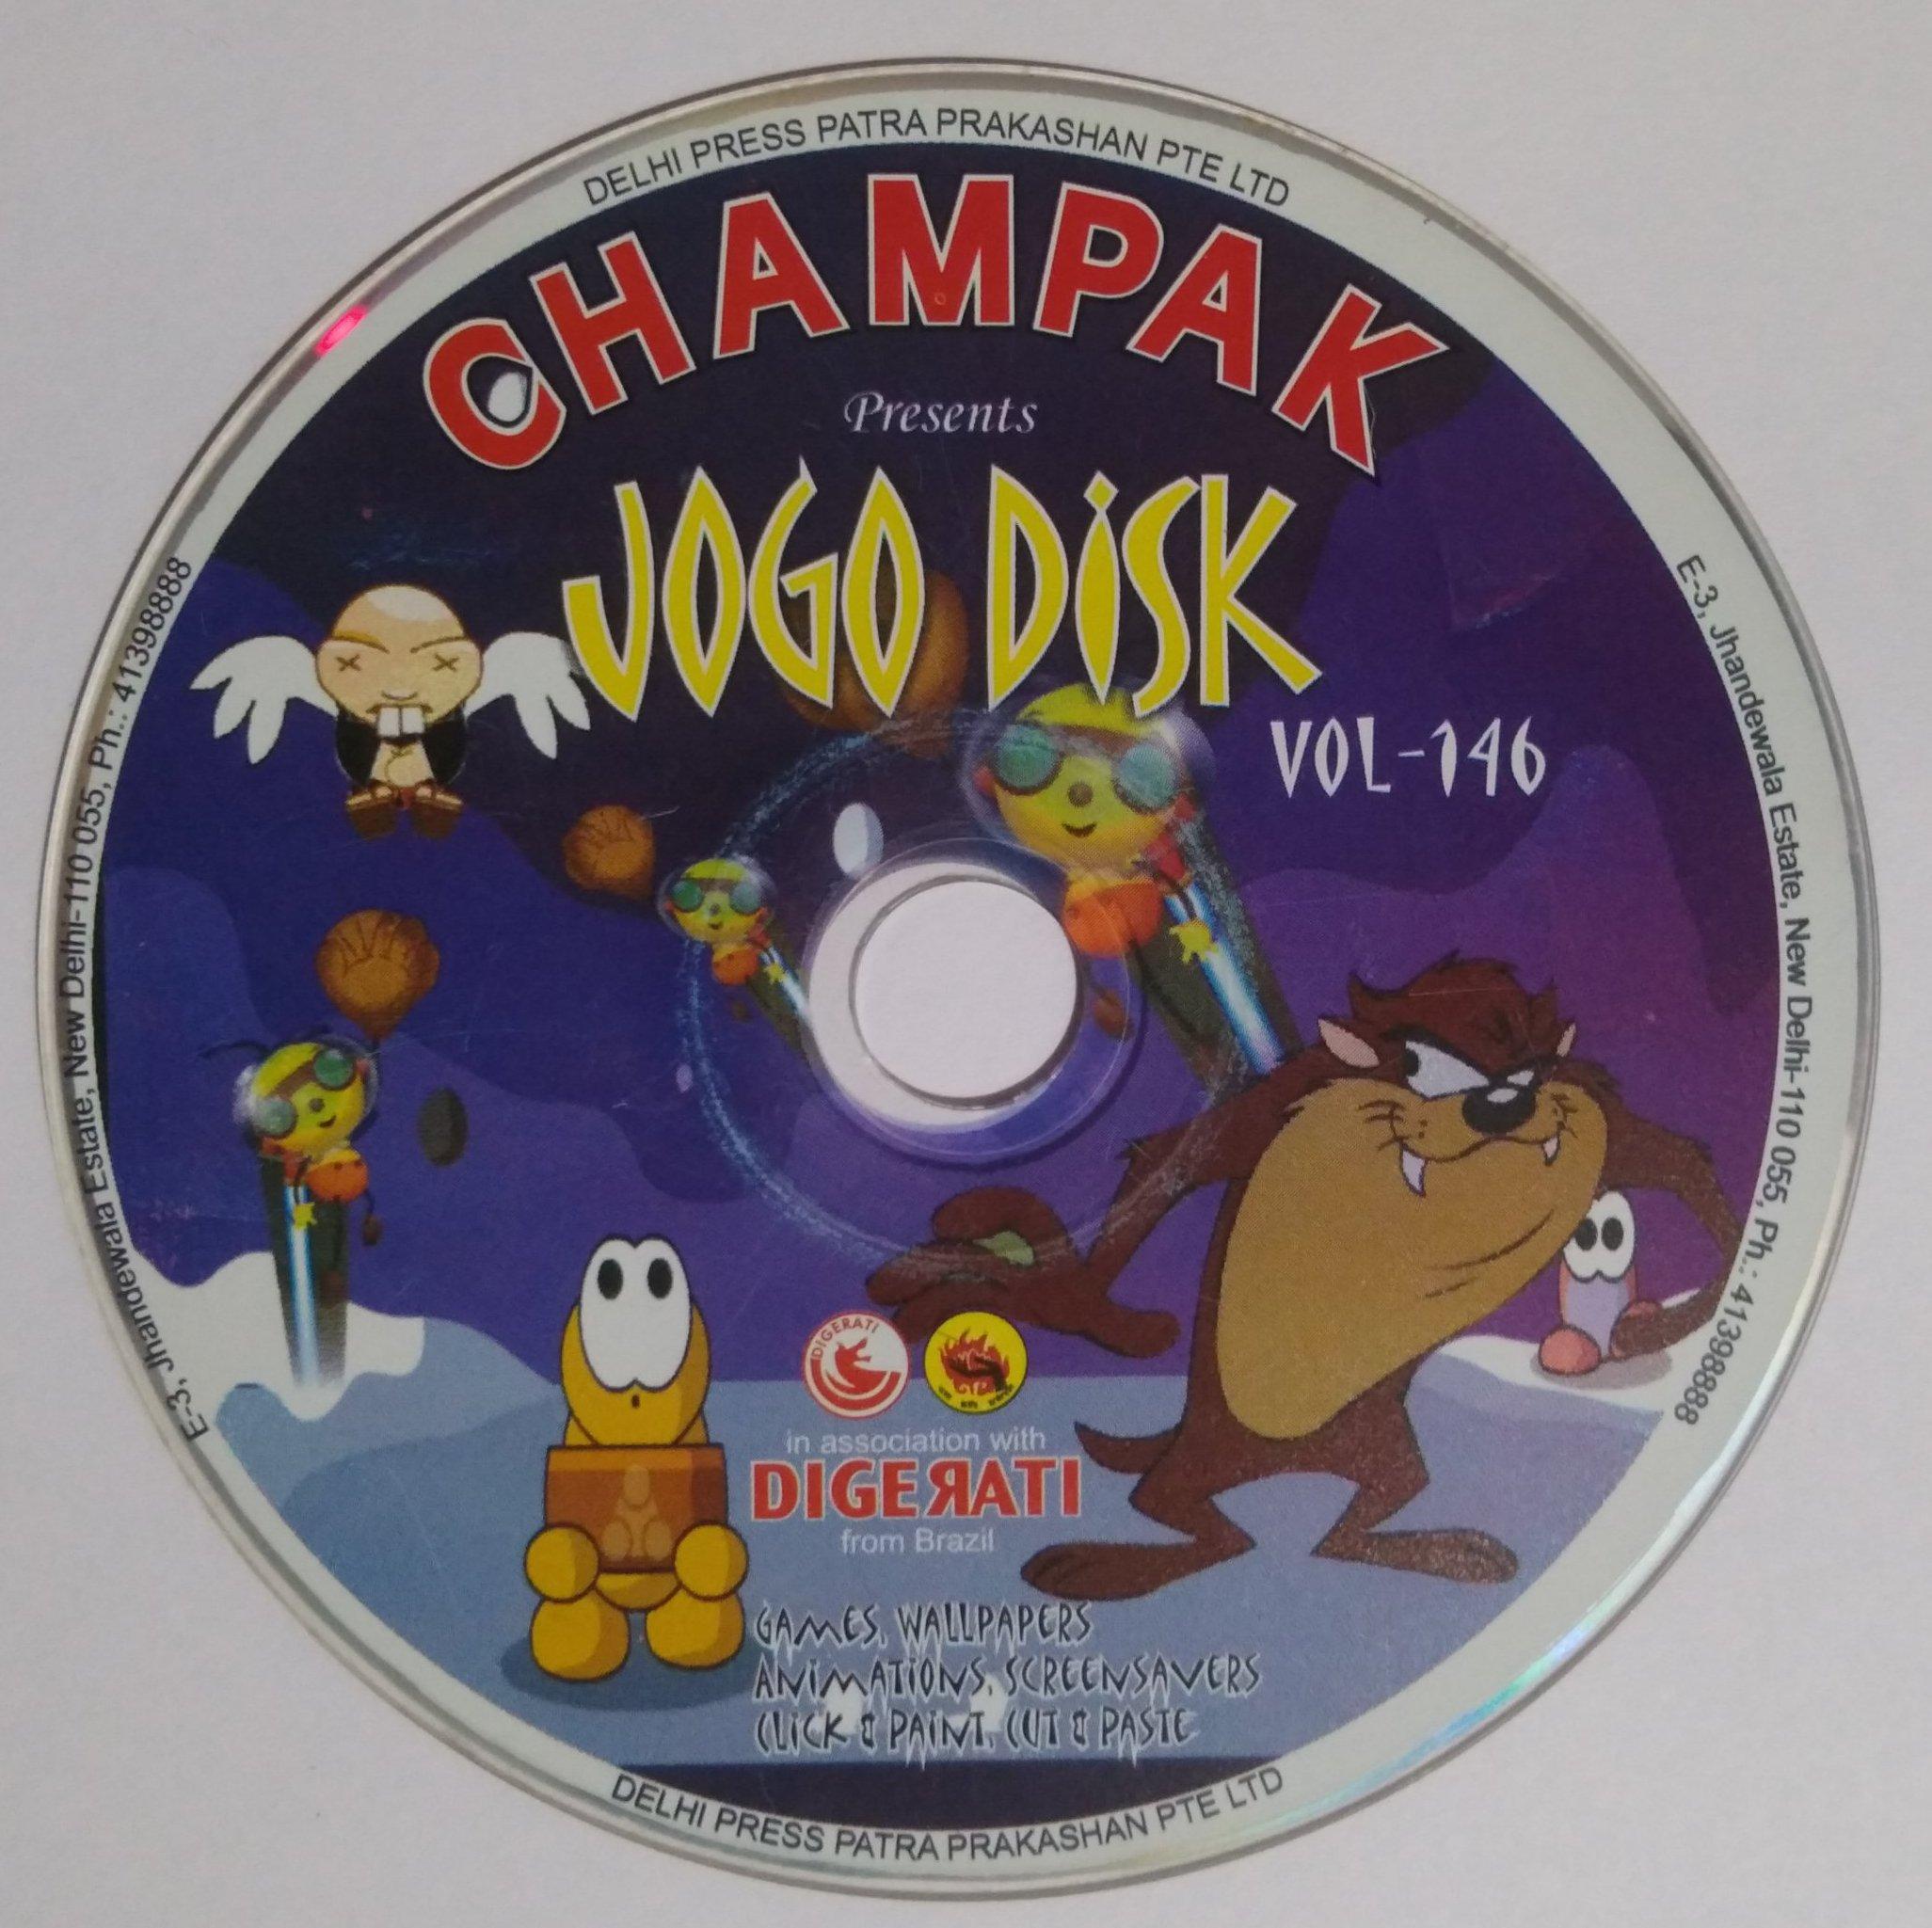 Champak/Digerati Jogo Disk Volume 145 : Free Download, Borrow, and  Streaming : Internet Archive